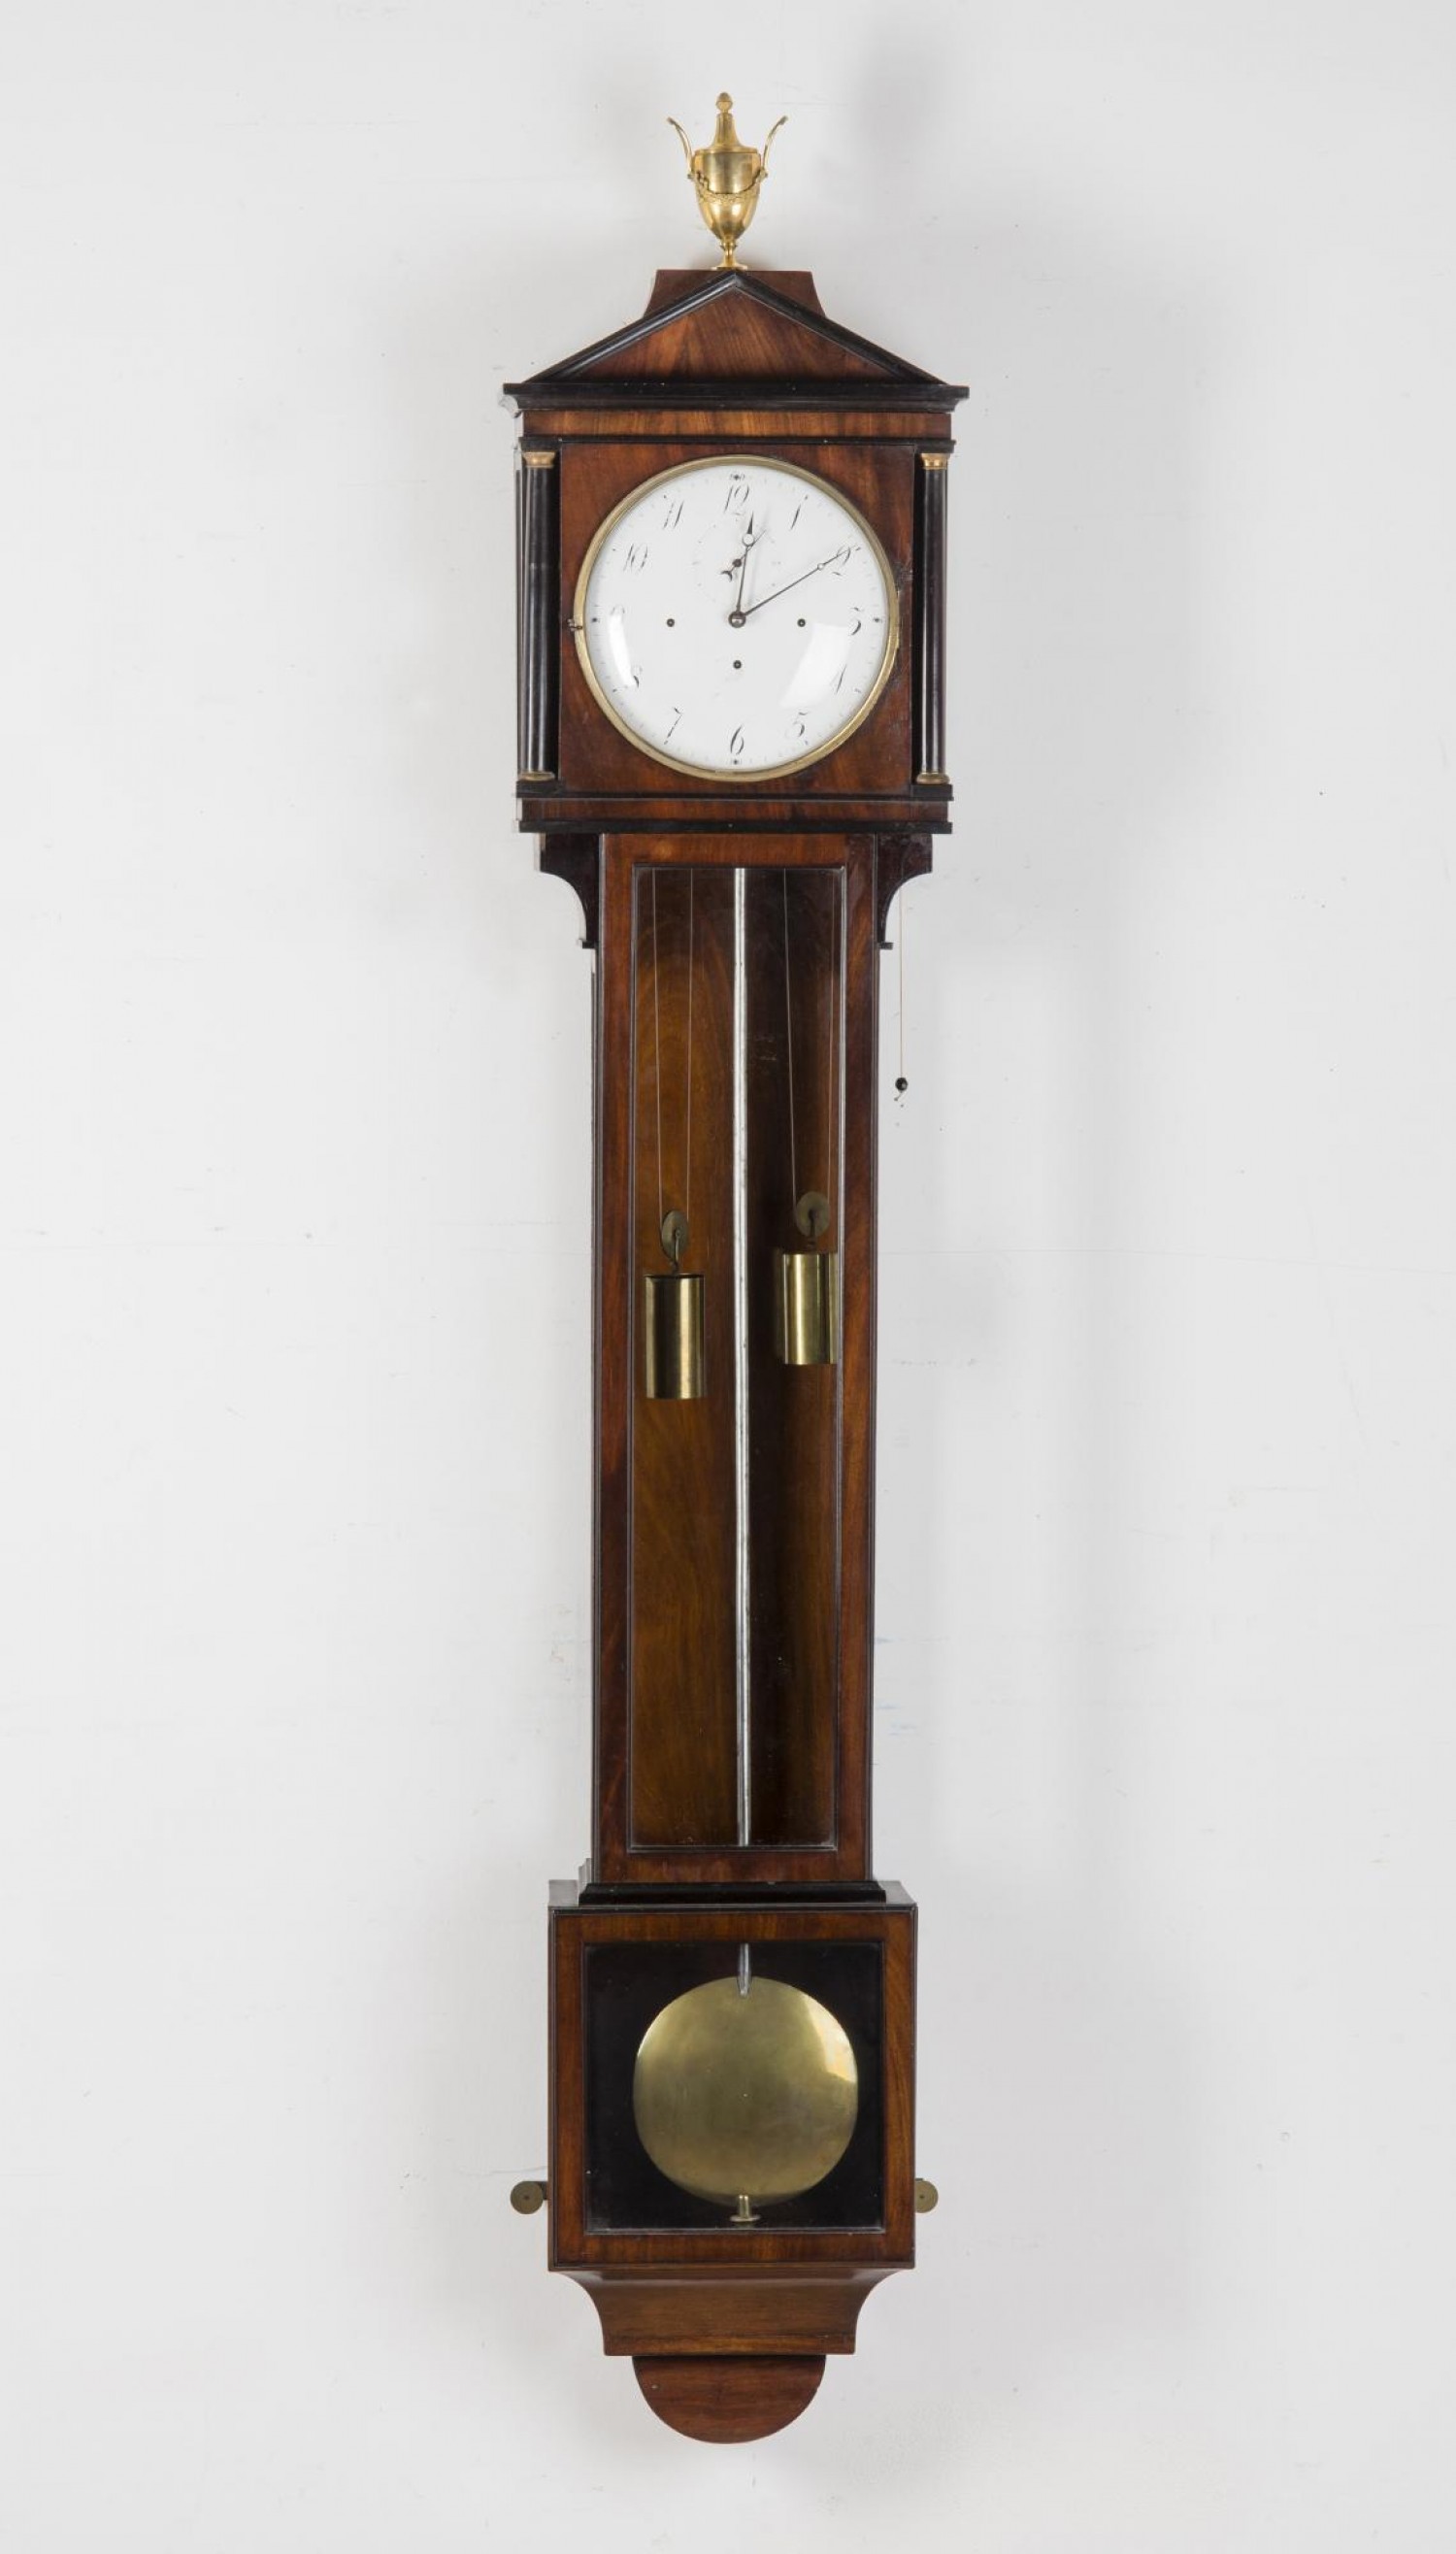 Nástěnné biedermeierové hodiny (Rakousko), 1820-1840  dřevo, mahagonová dýha, sklo, smalt, bronz, výška 156 cm cena: 1 140 000 Kč Dorotheum 25. 5. 2019